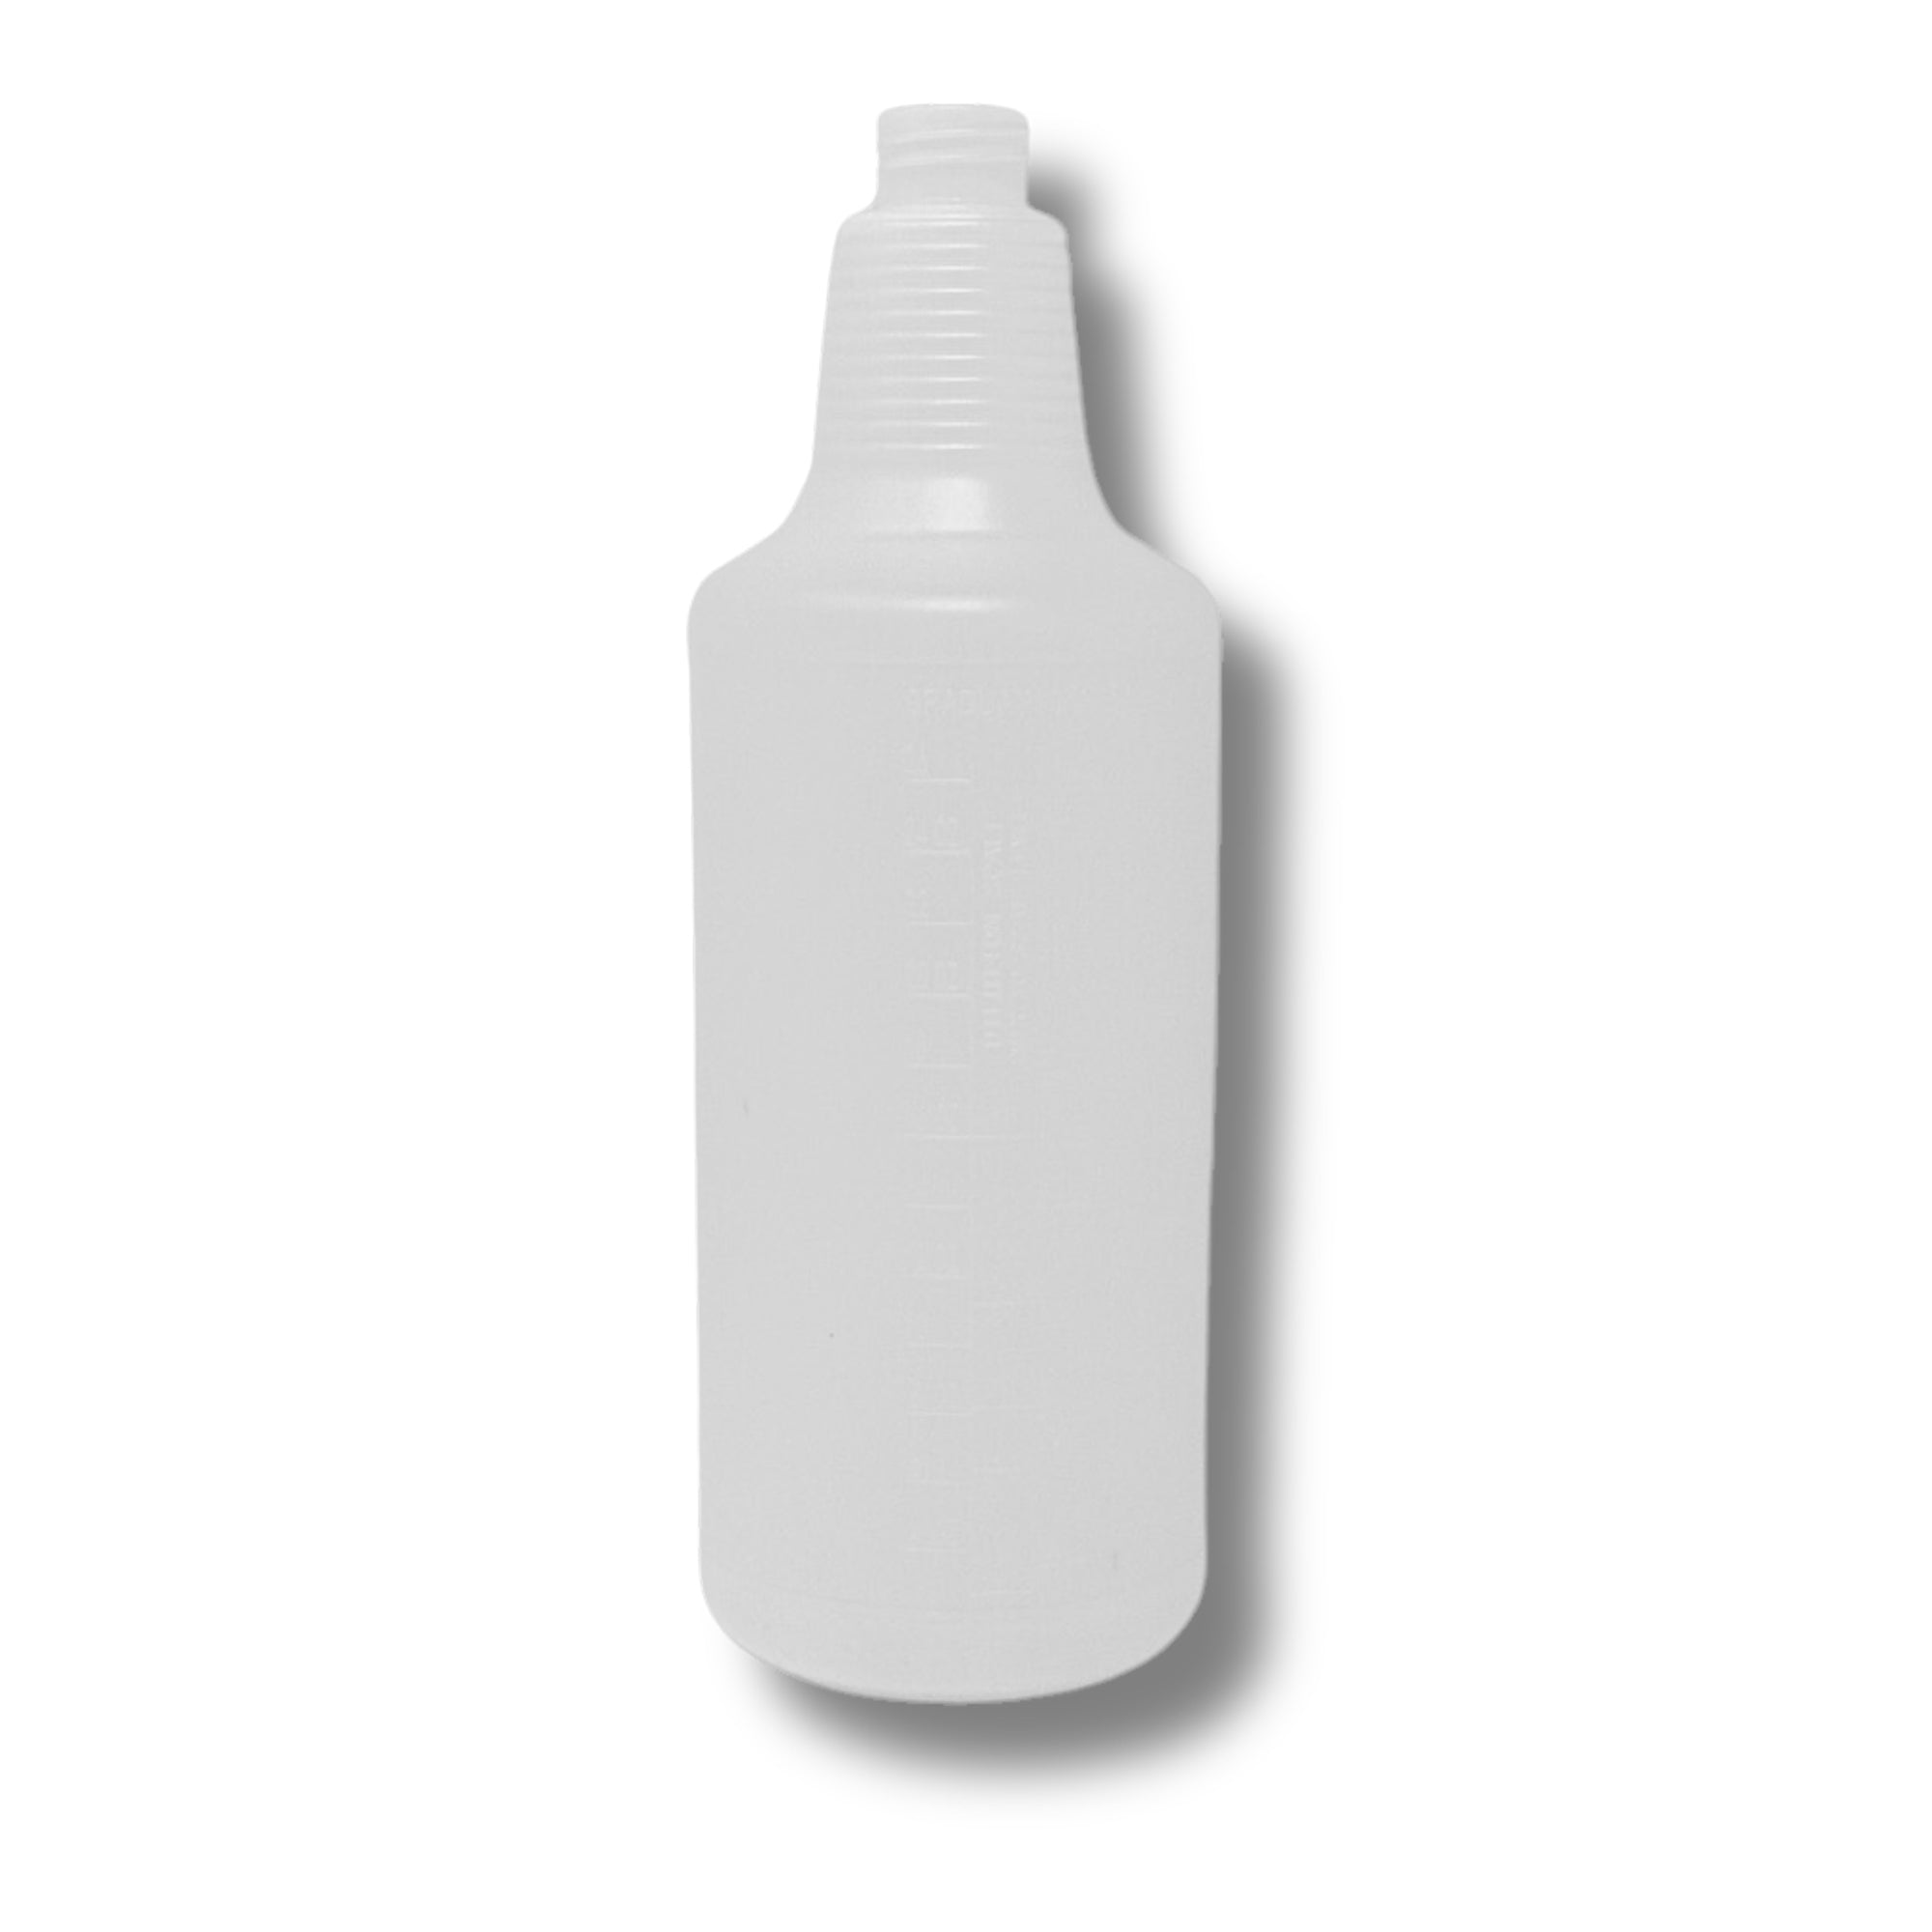 Meguiars D155 Last Touch Detailing Spray Bottle | 32oz Empty Bottle with  Sprayer